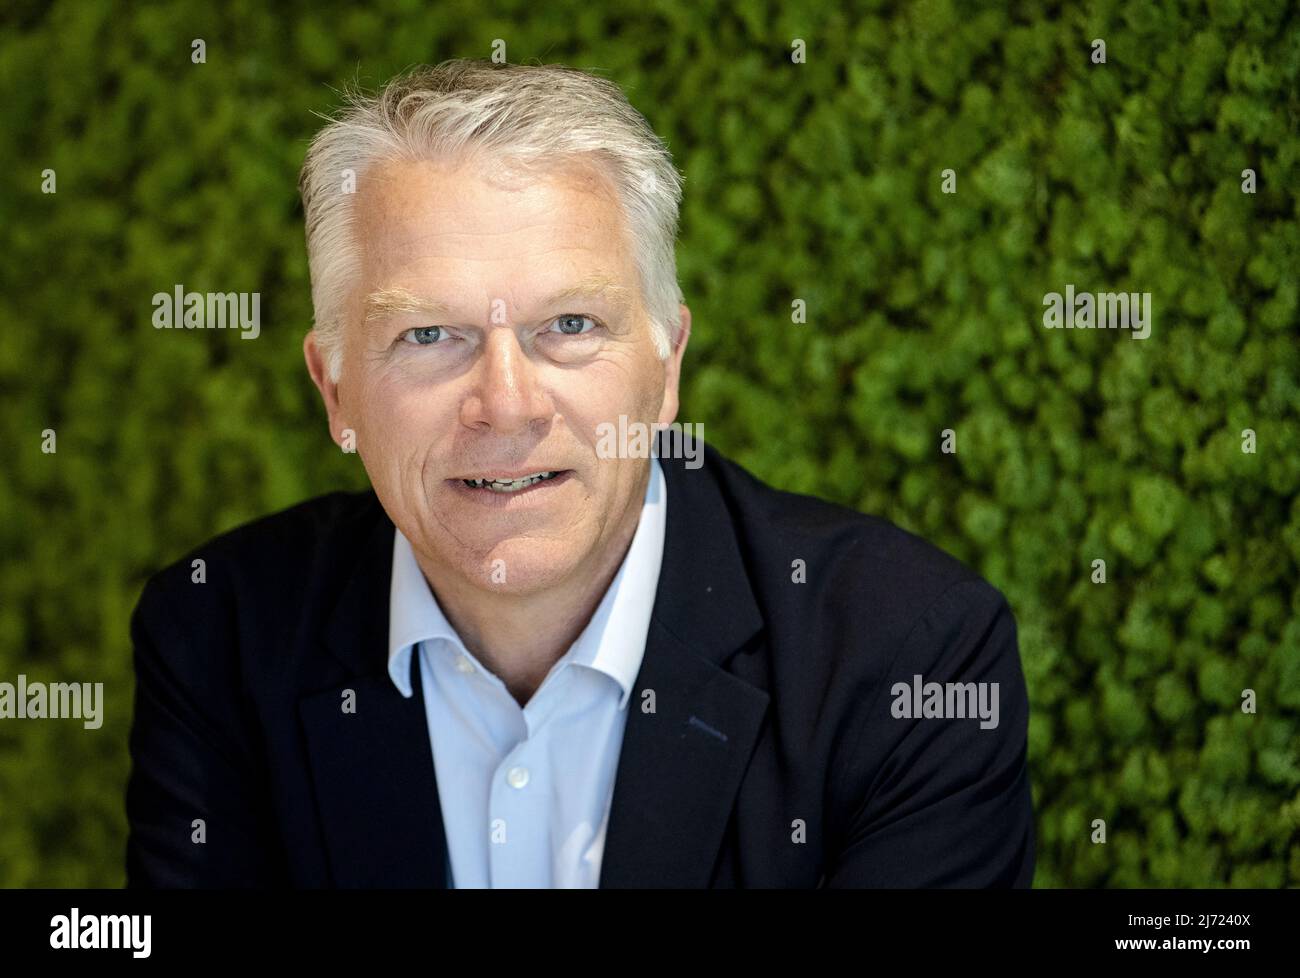 2022-05-04 11:31:18 WAGENINGEN - Portrait of Wouter Bos, CEO of health  insurer Menzis. ANP SEM VAN DER WAL netherlands out - belgium out Stock  Photo - Alamy